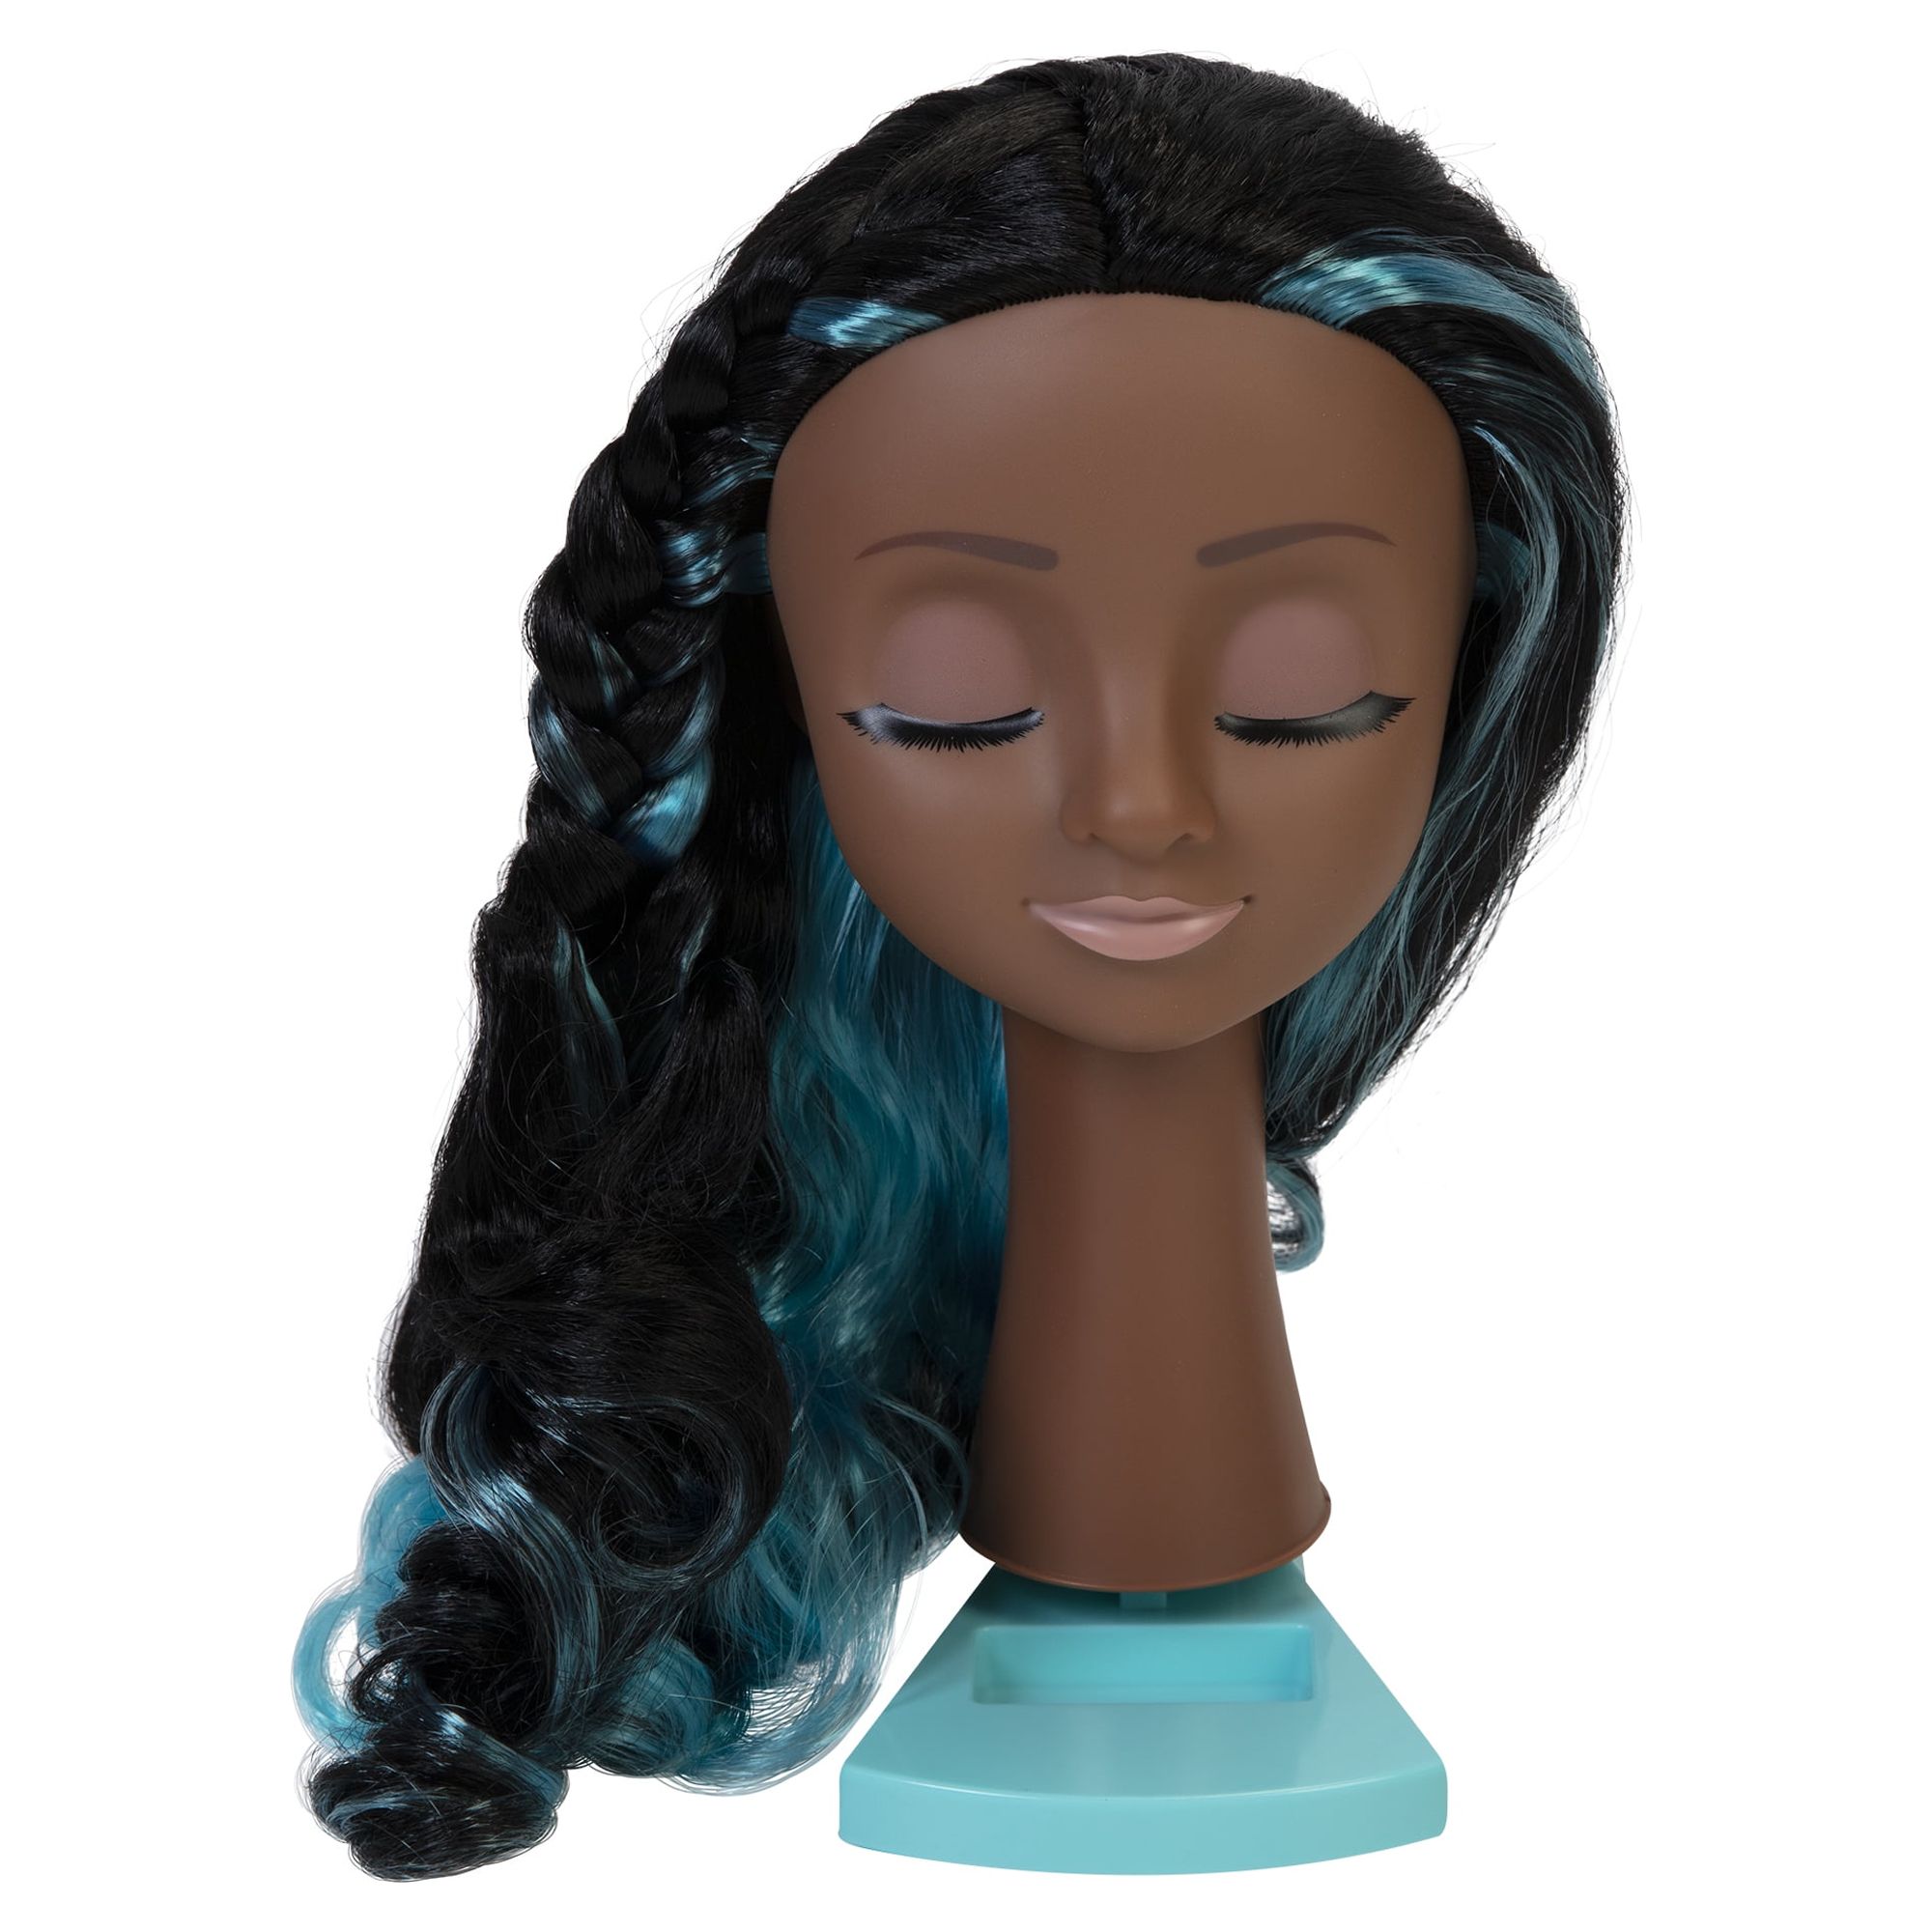 CGH Cute Girls Hairstyles! Styling Head - Black Wavy Hair Doll - image 3 of 10